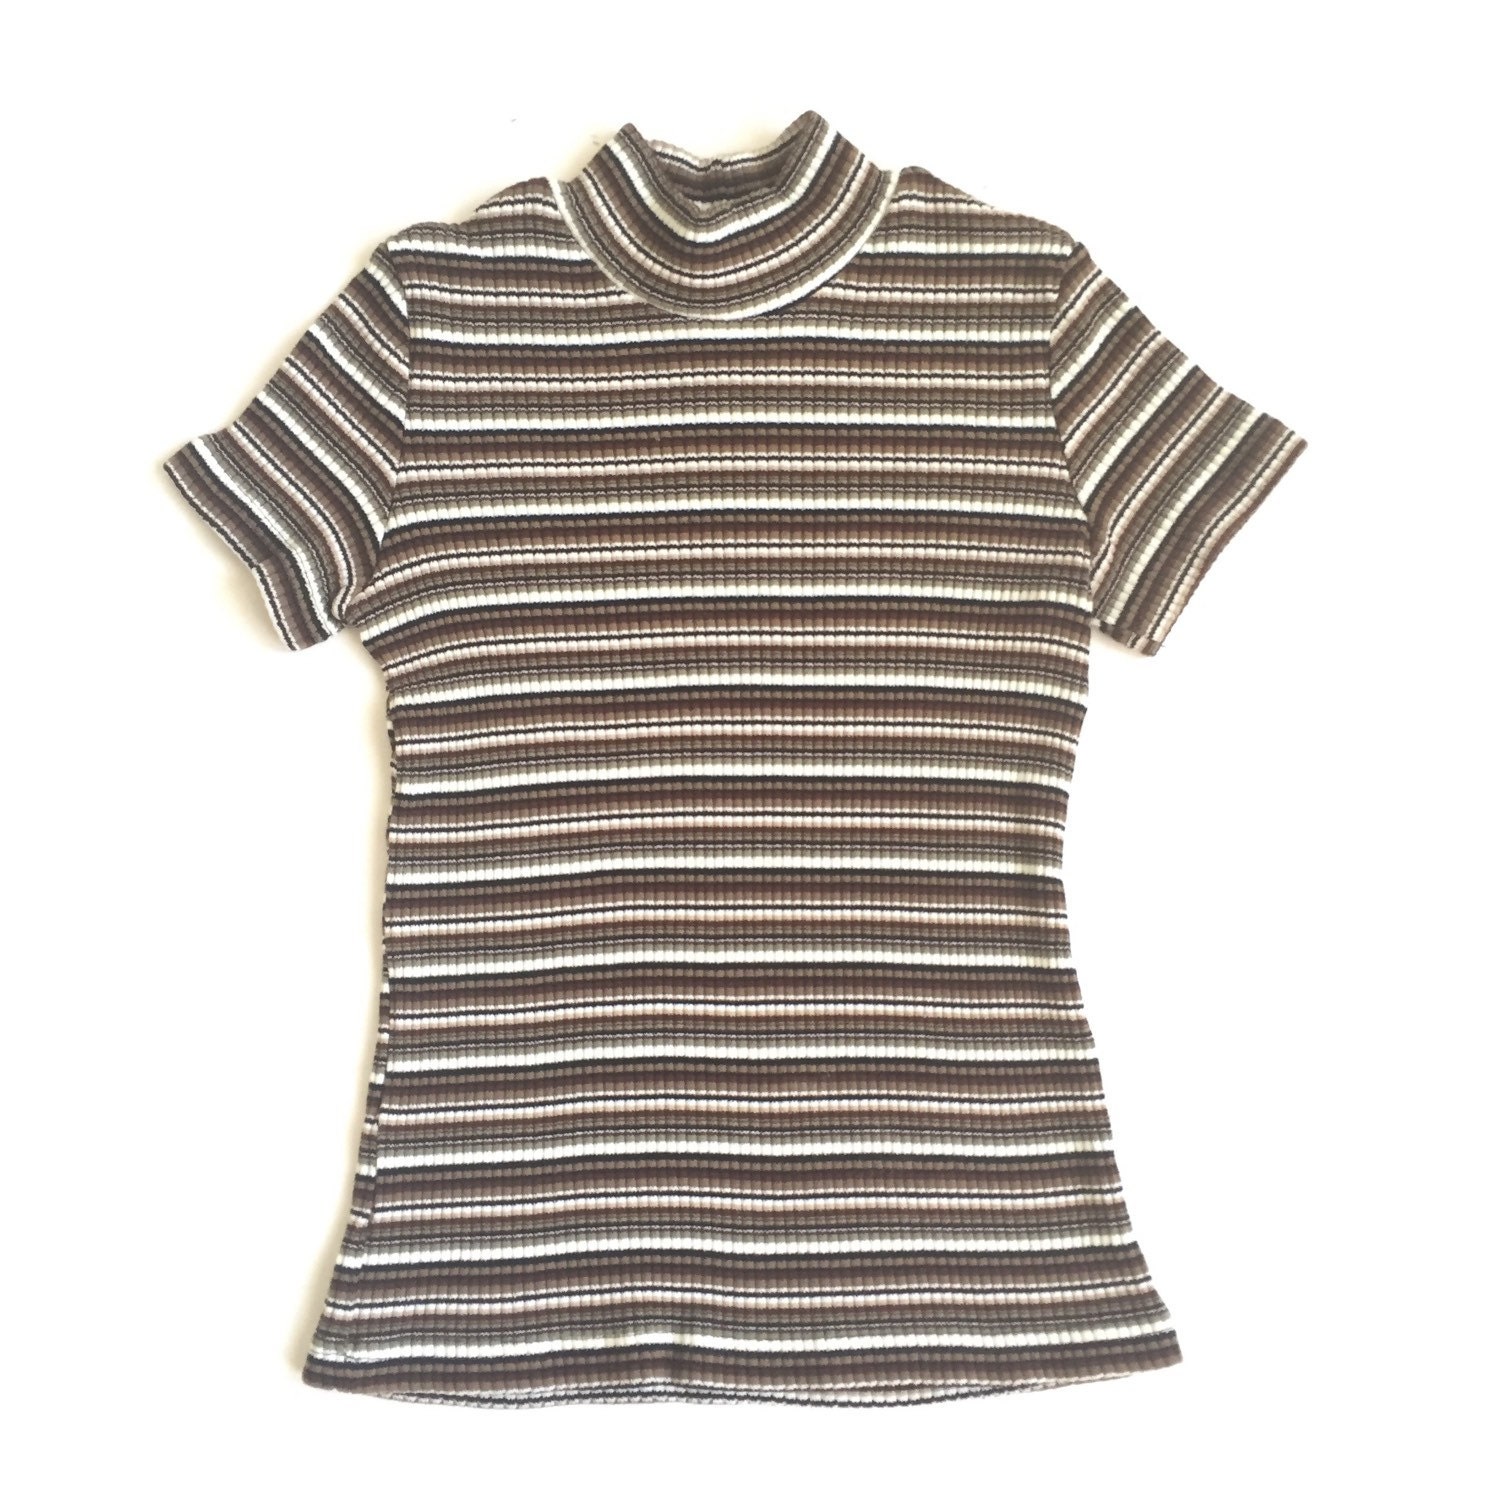 90s Grunge Striped Ribbed Mock Turtleneck Crop Top Shirt